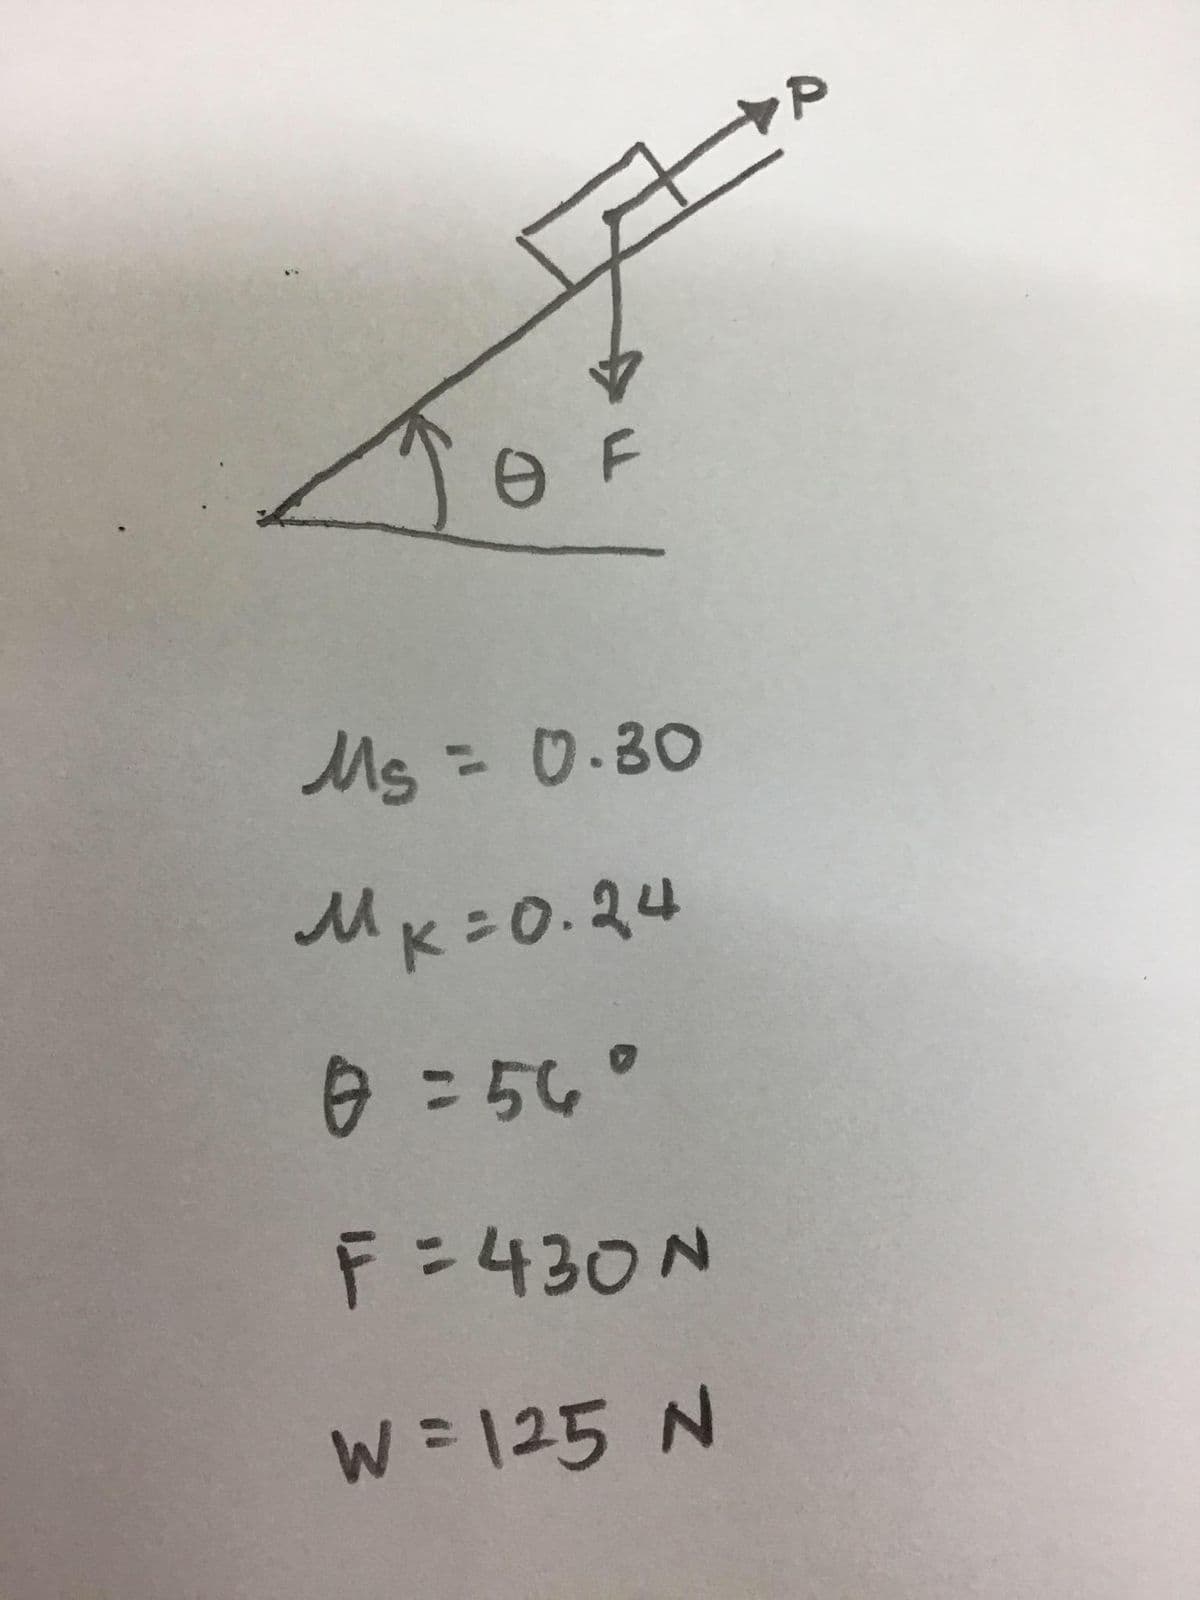 Ms =0.30
Mx=0.24
0 =56°
F=430N
W= 125 N
